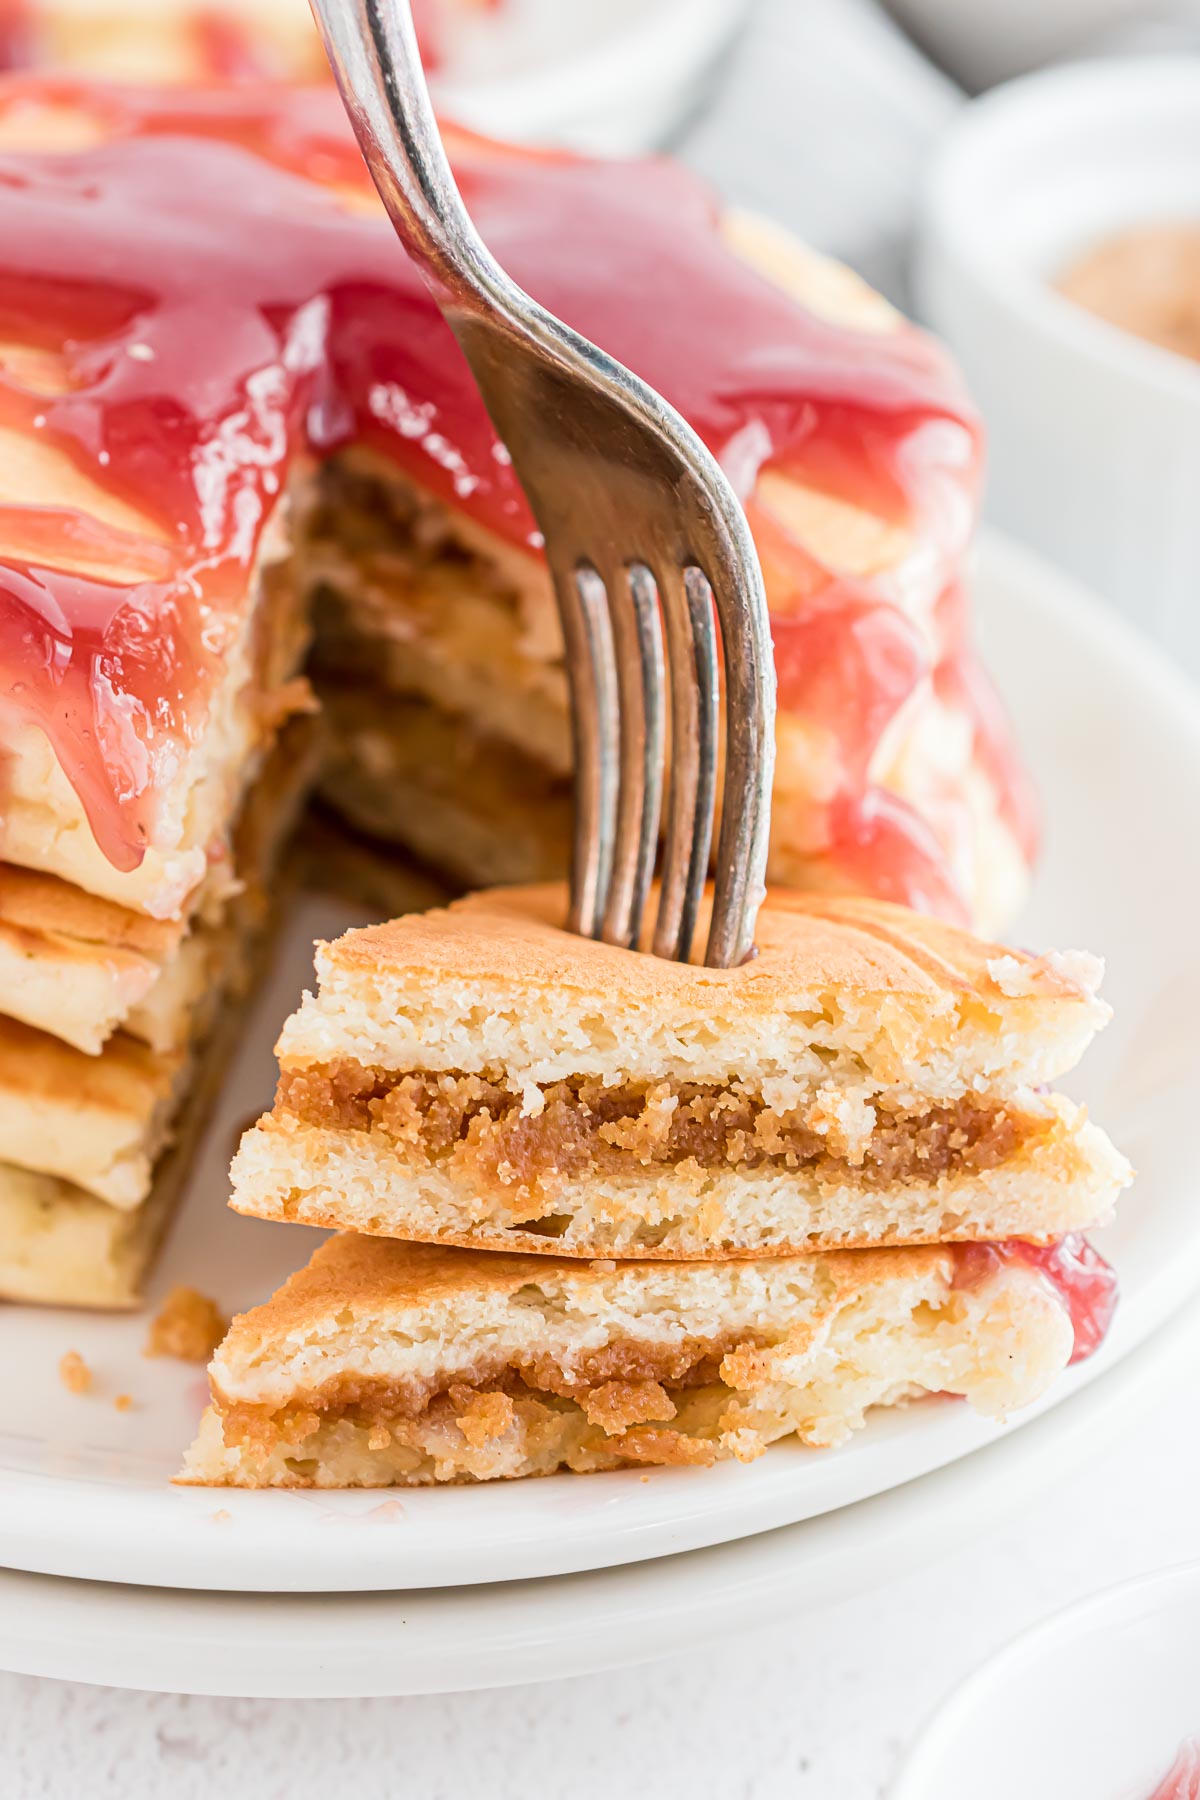 Peanut butter stuffed pancakes on a fork.